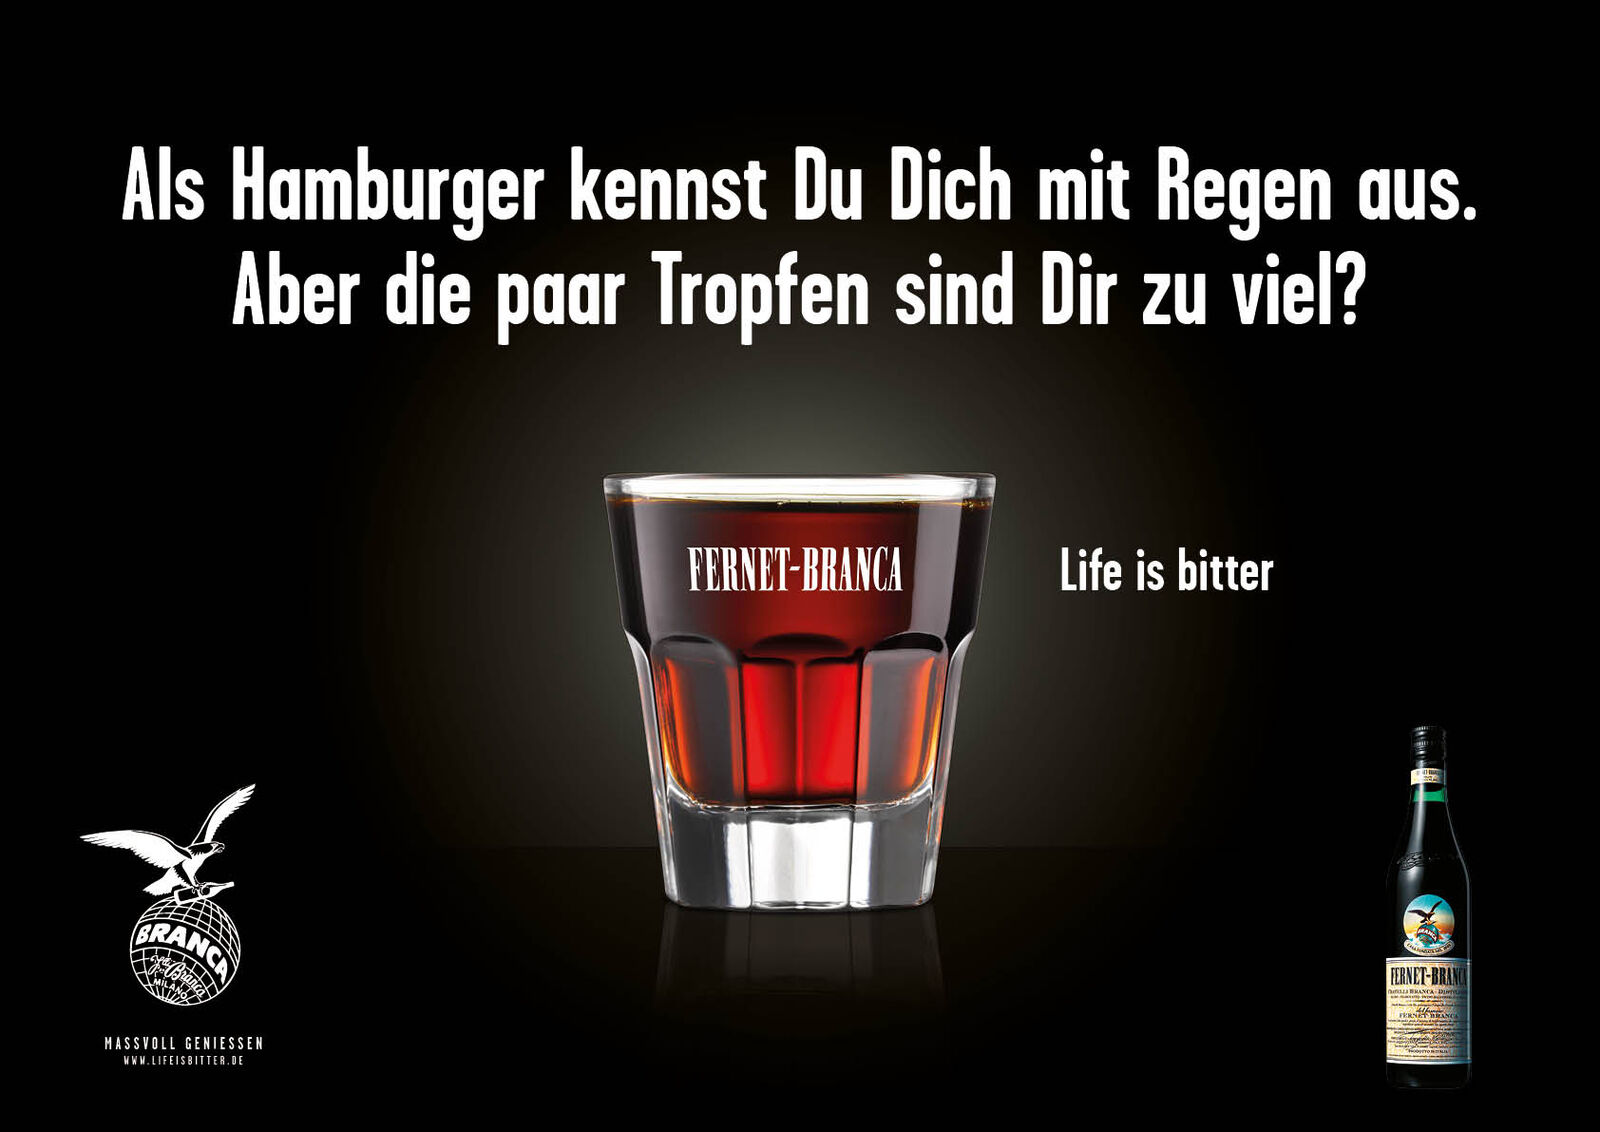 Fernet-Branca “Life is bitter“-Kampagne